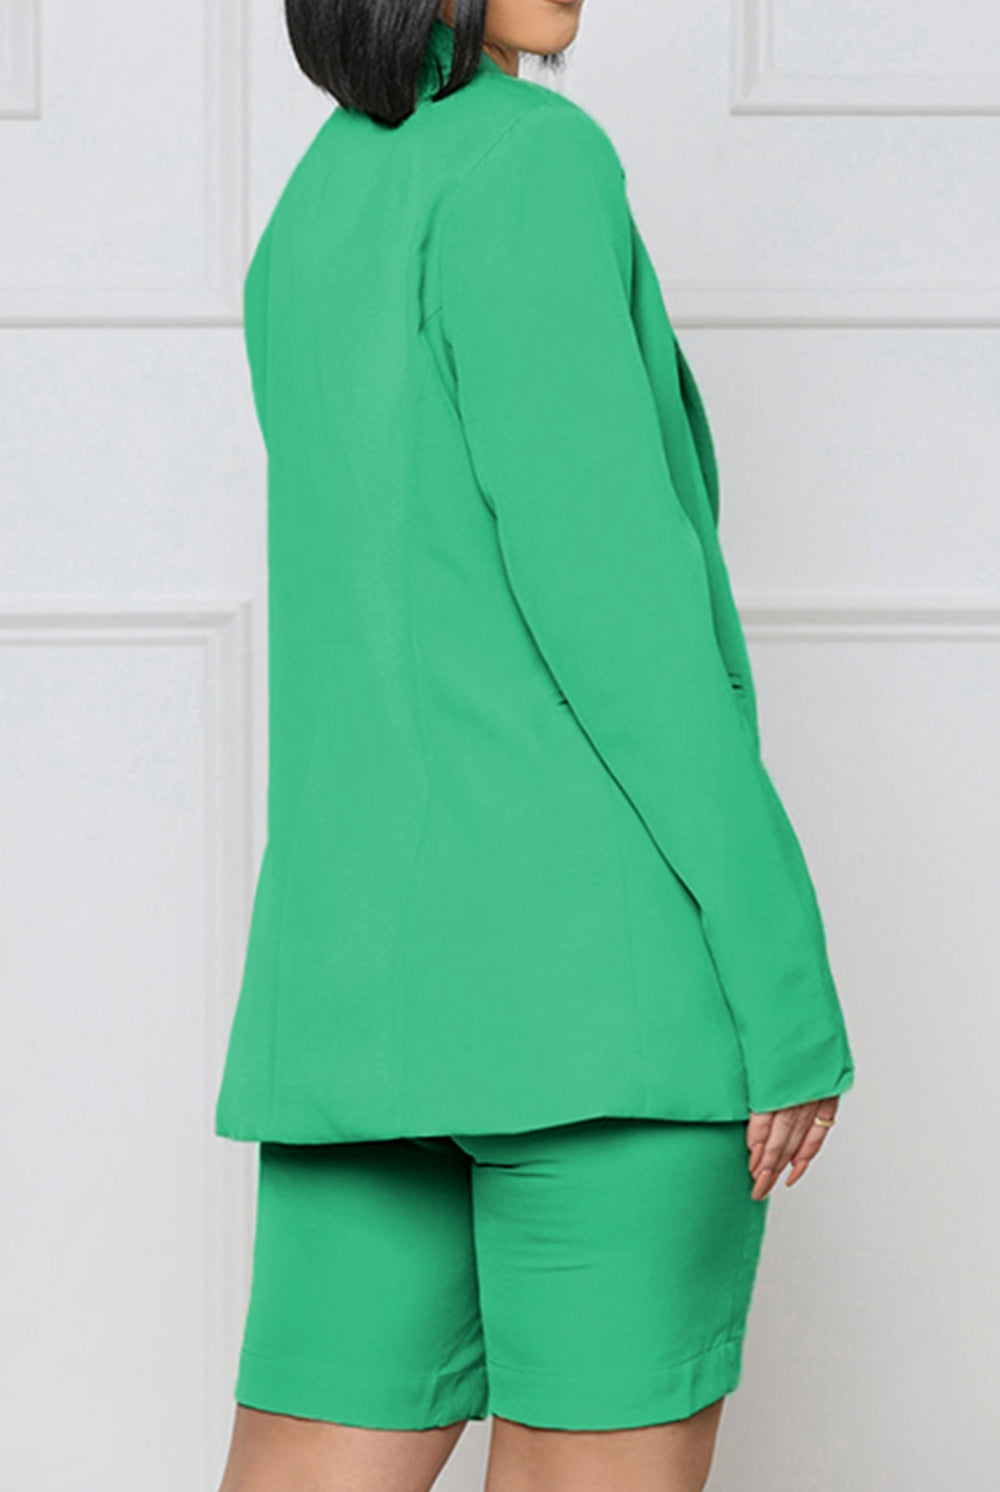 Medium Sea Green Long Sleeve Blazer and Shorts Set Outfit Sets